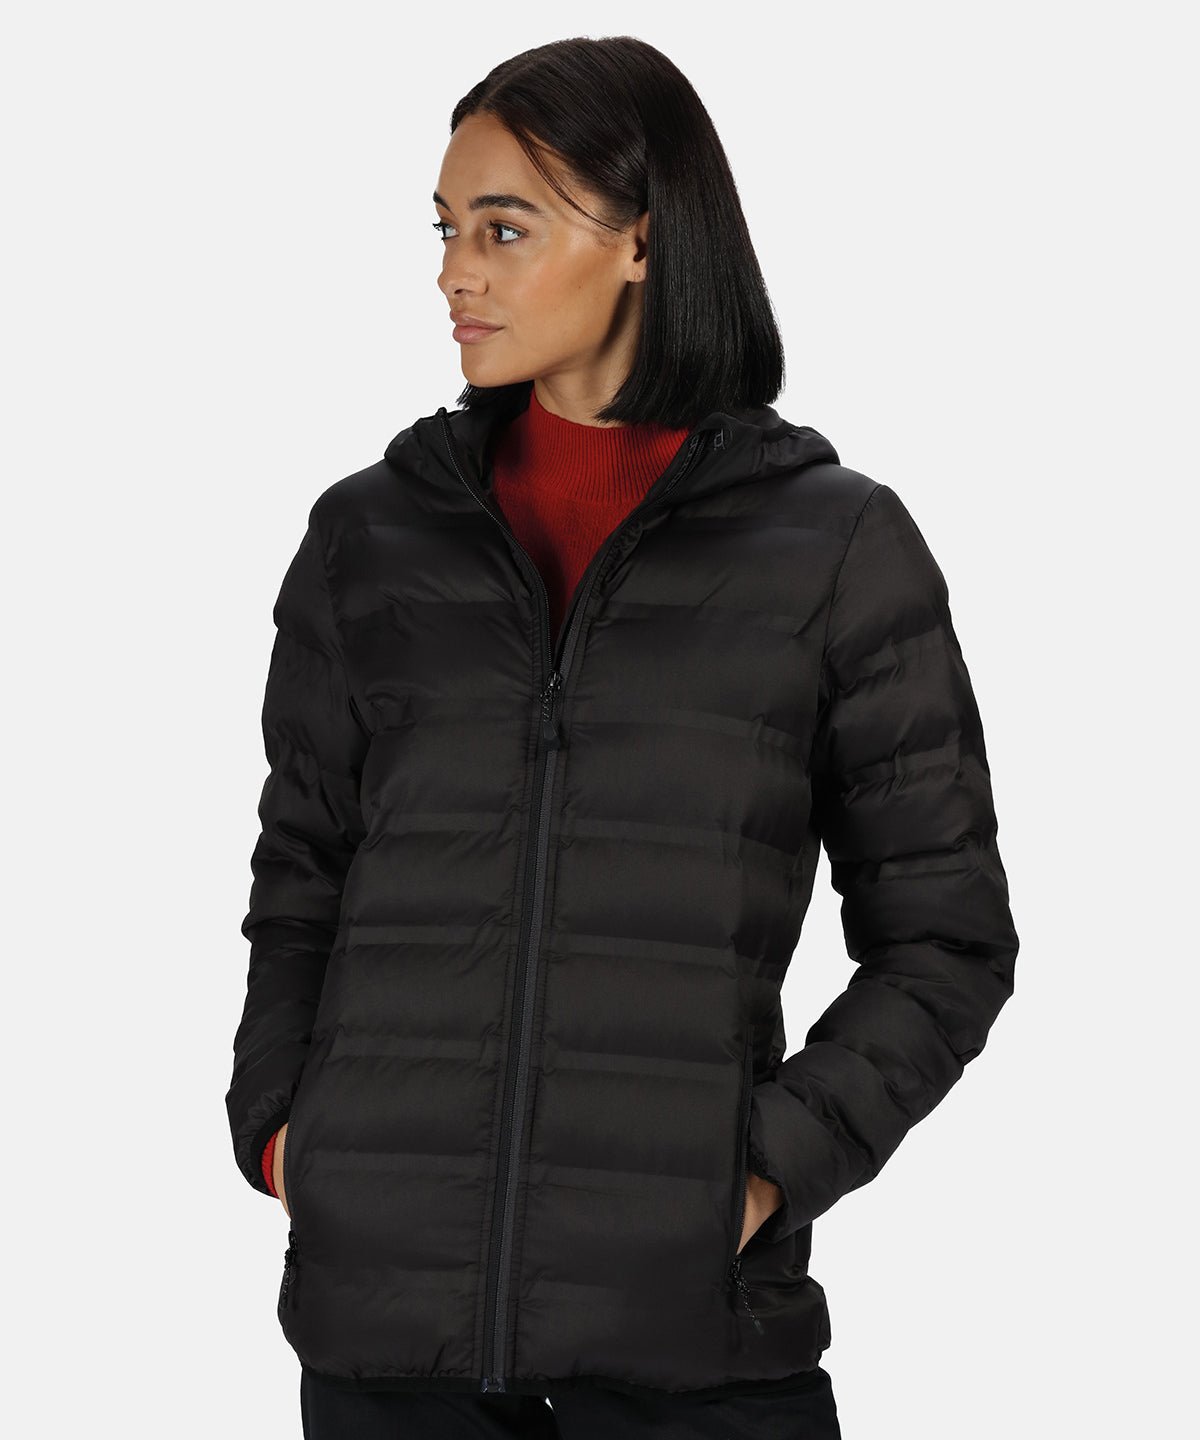 Women's X-Pro Icefall II thermal seamless jacket